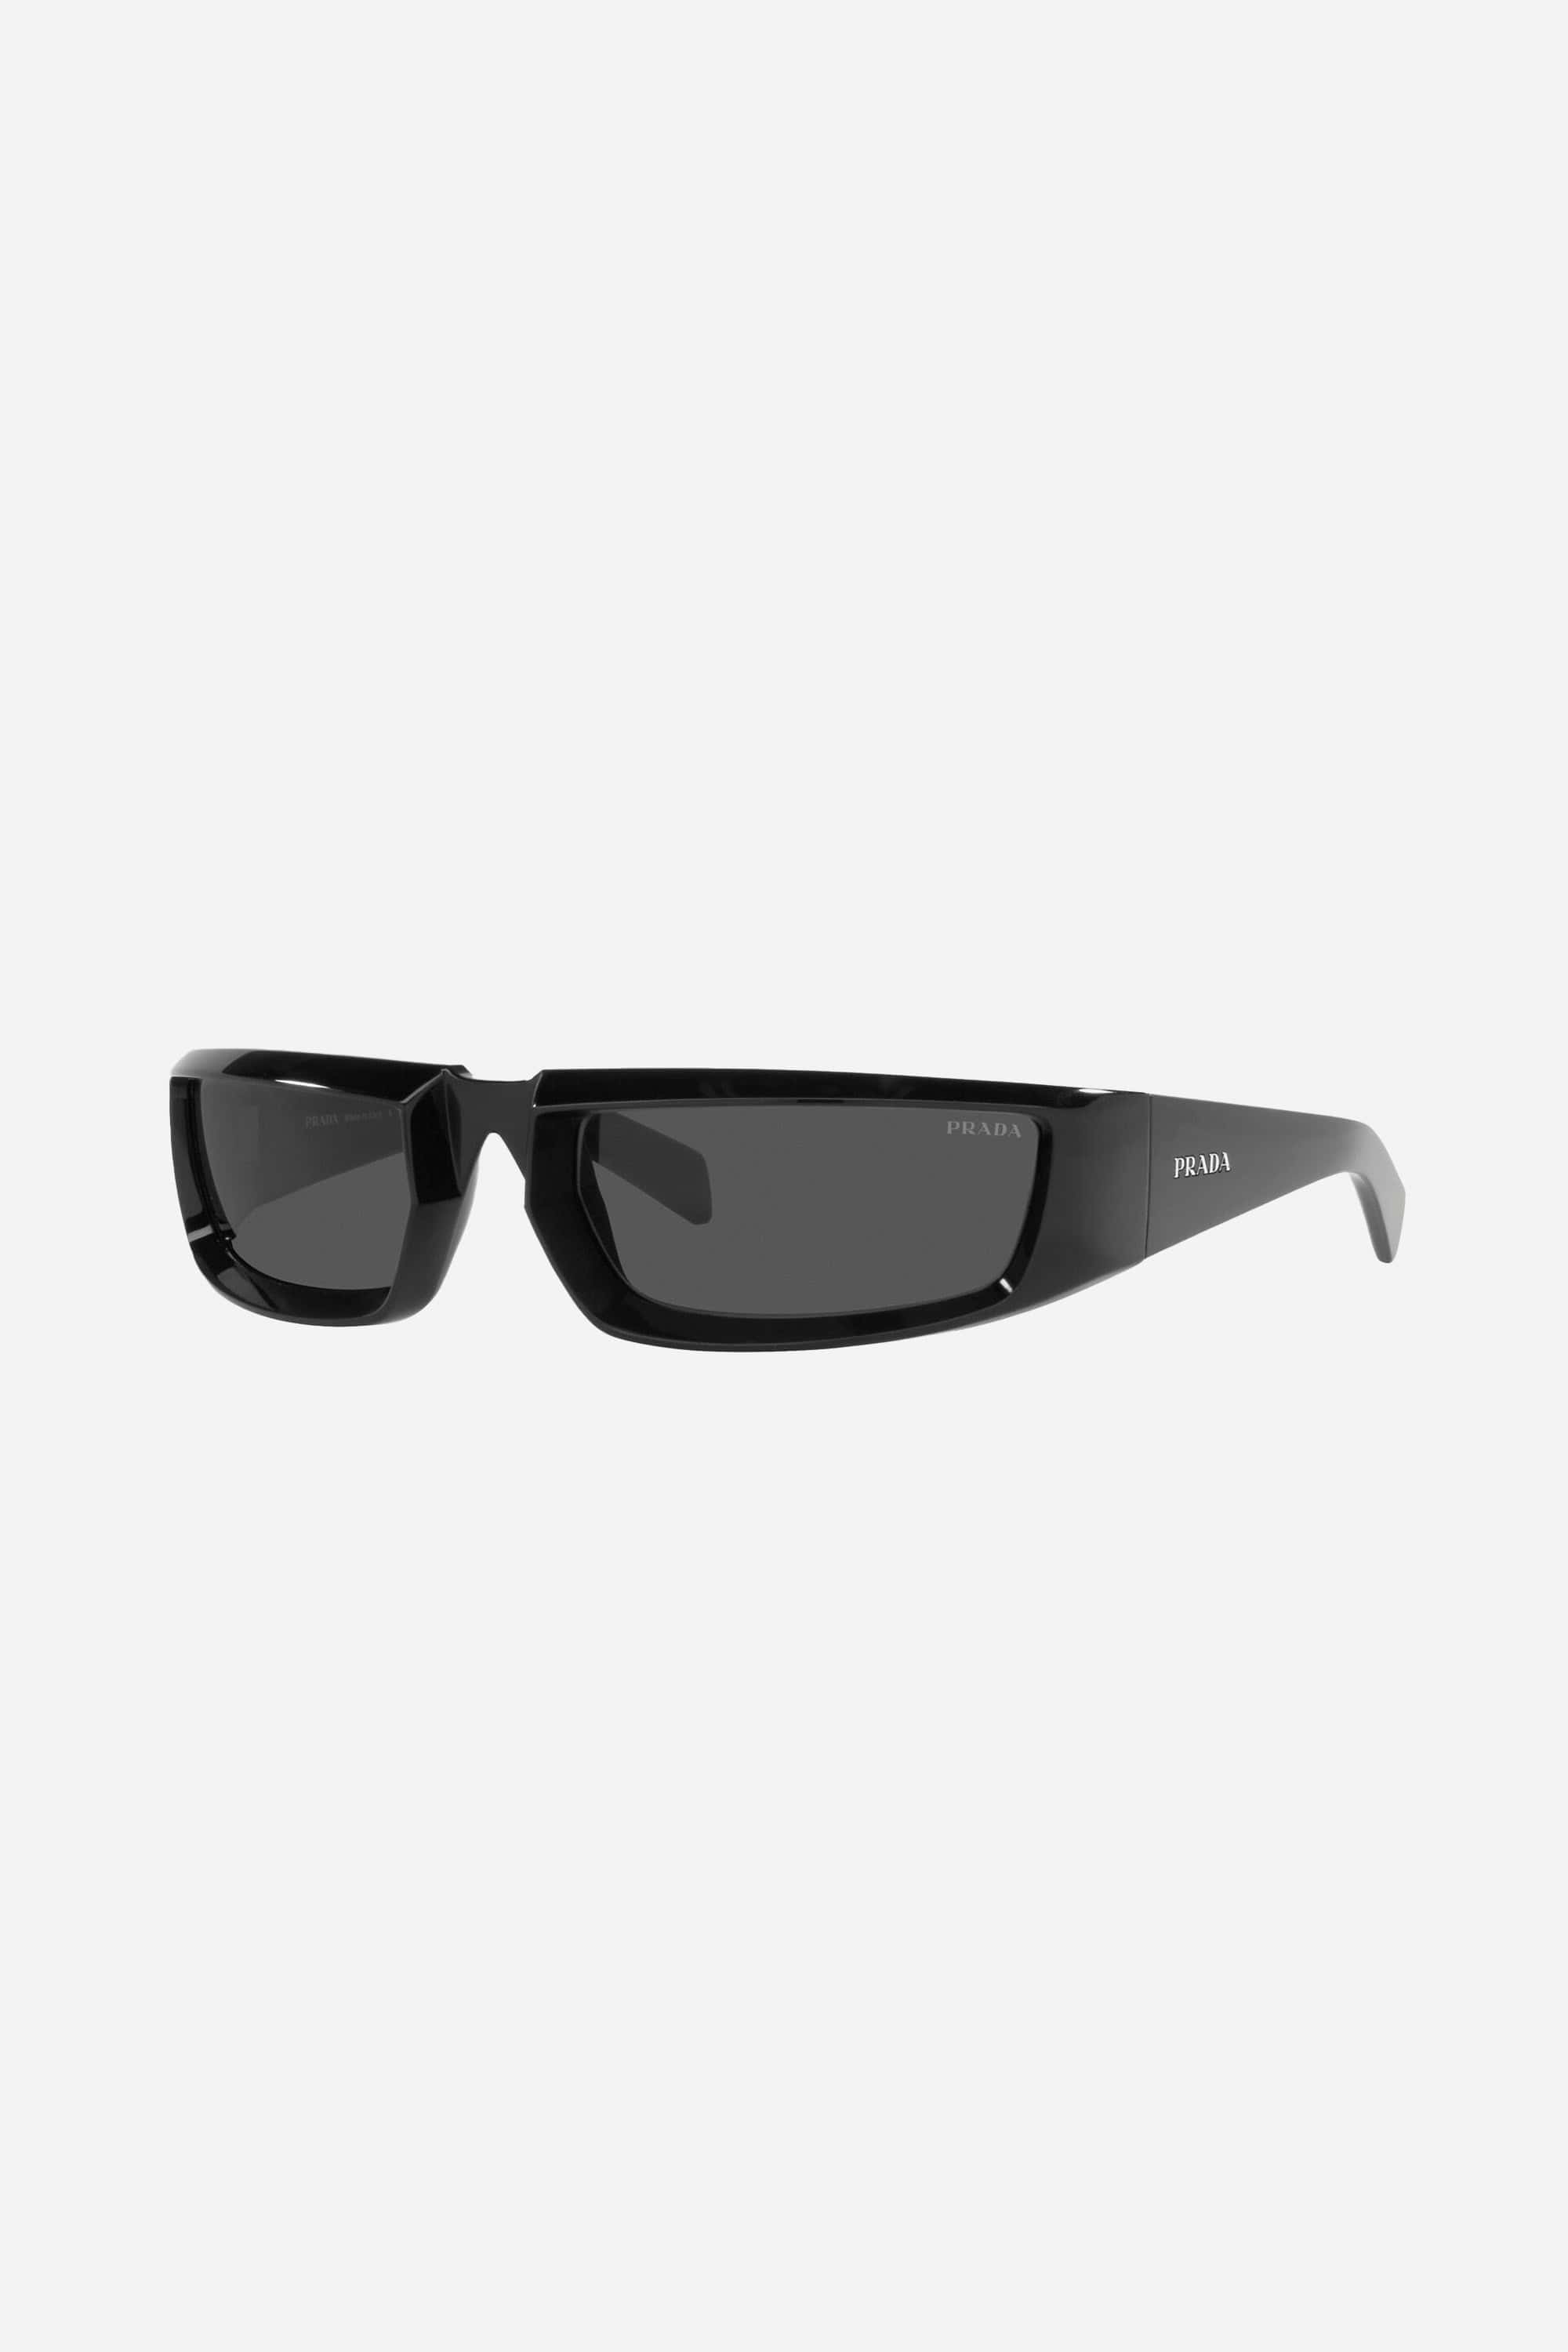 Prada runway wrap around black sunglasses